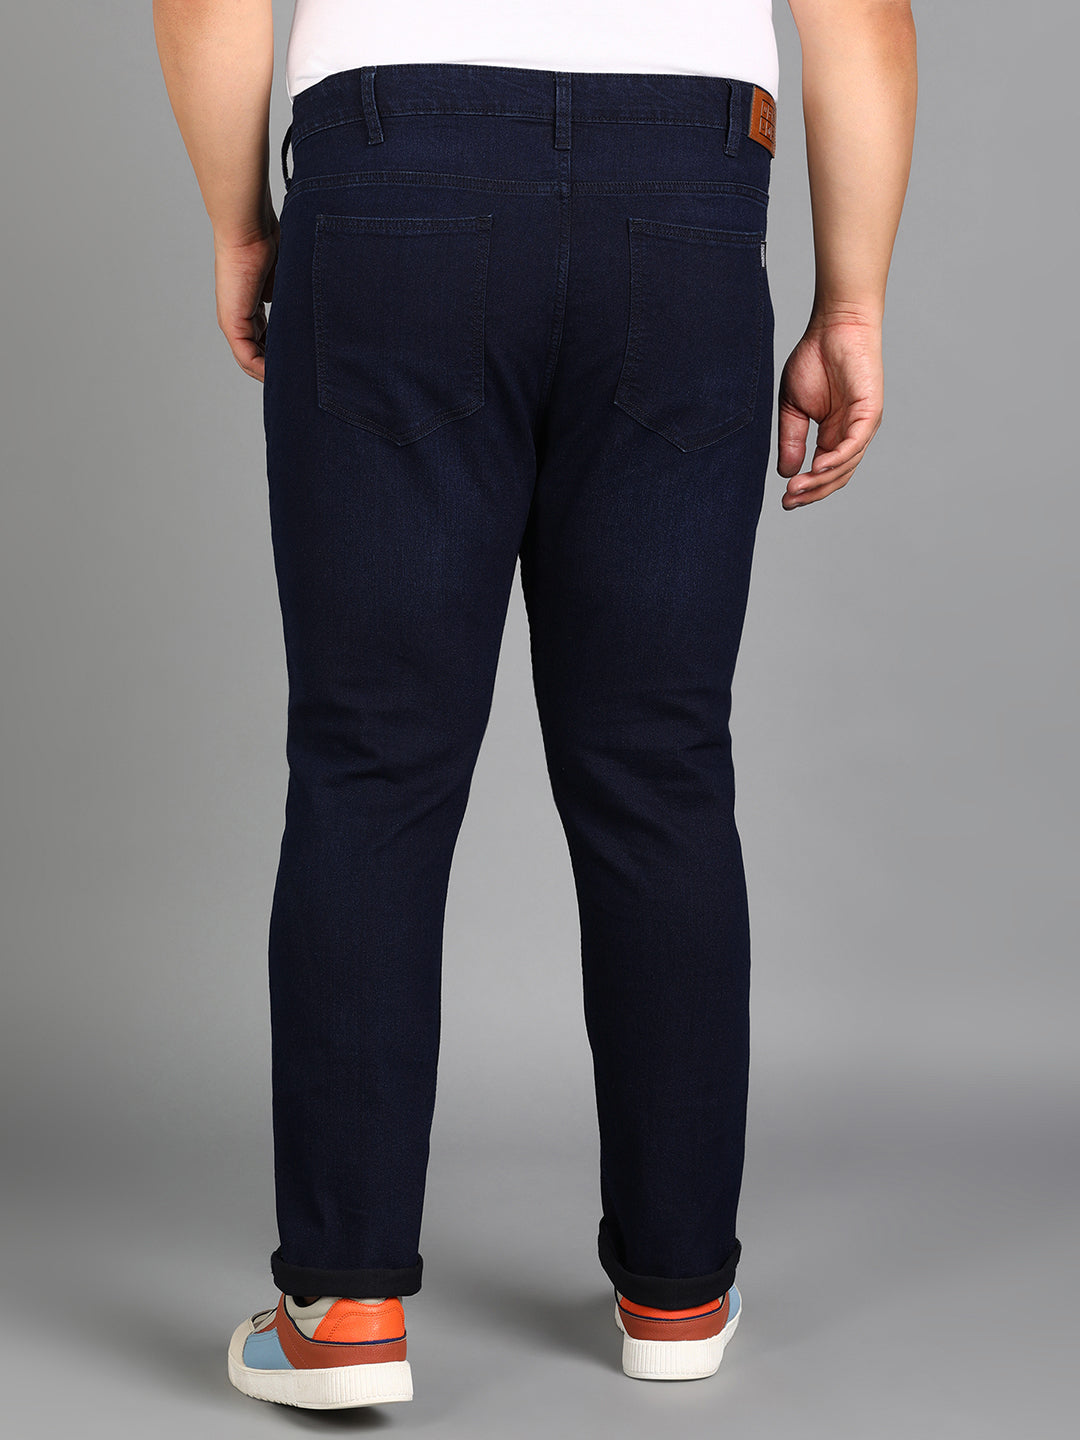 Plus Men's Carbon Blue Regular Fit Washed Jeans Stretchable